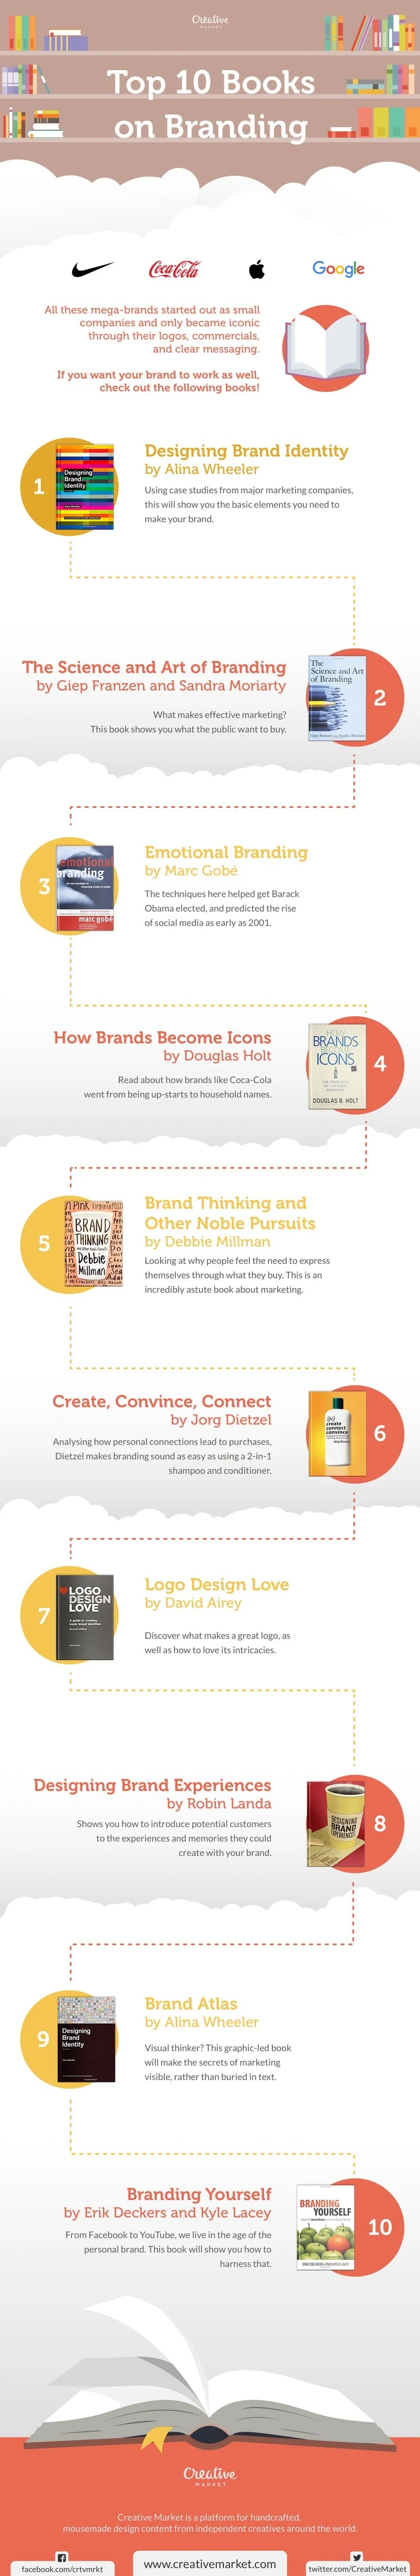 Top 10 Books on Branding - #infographic